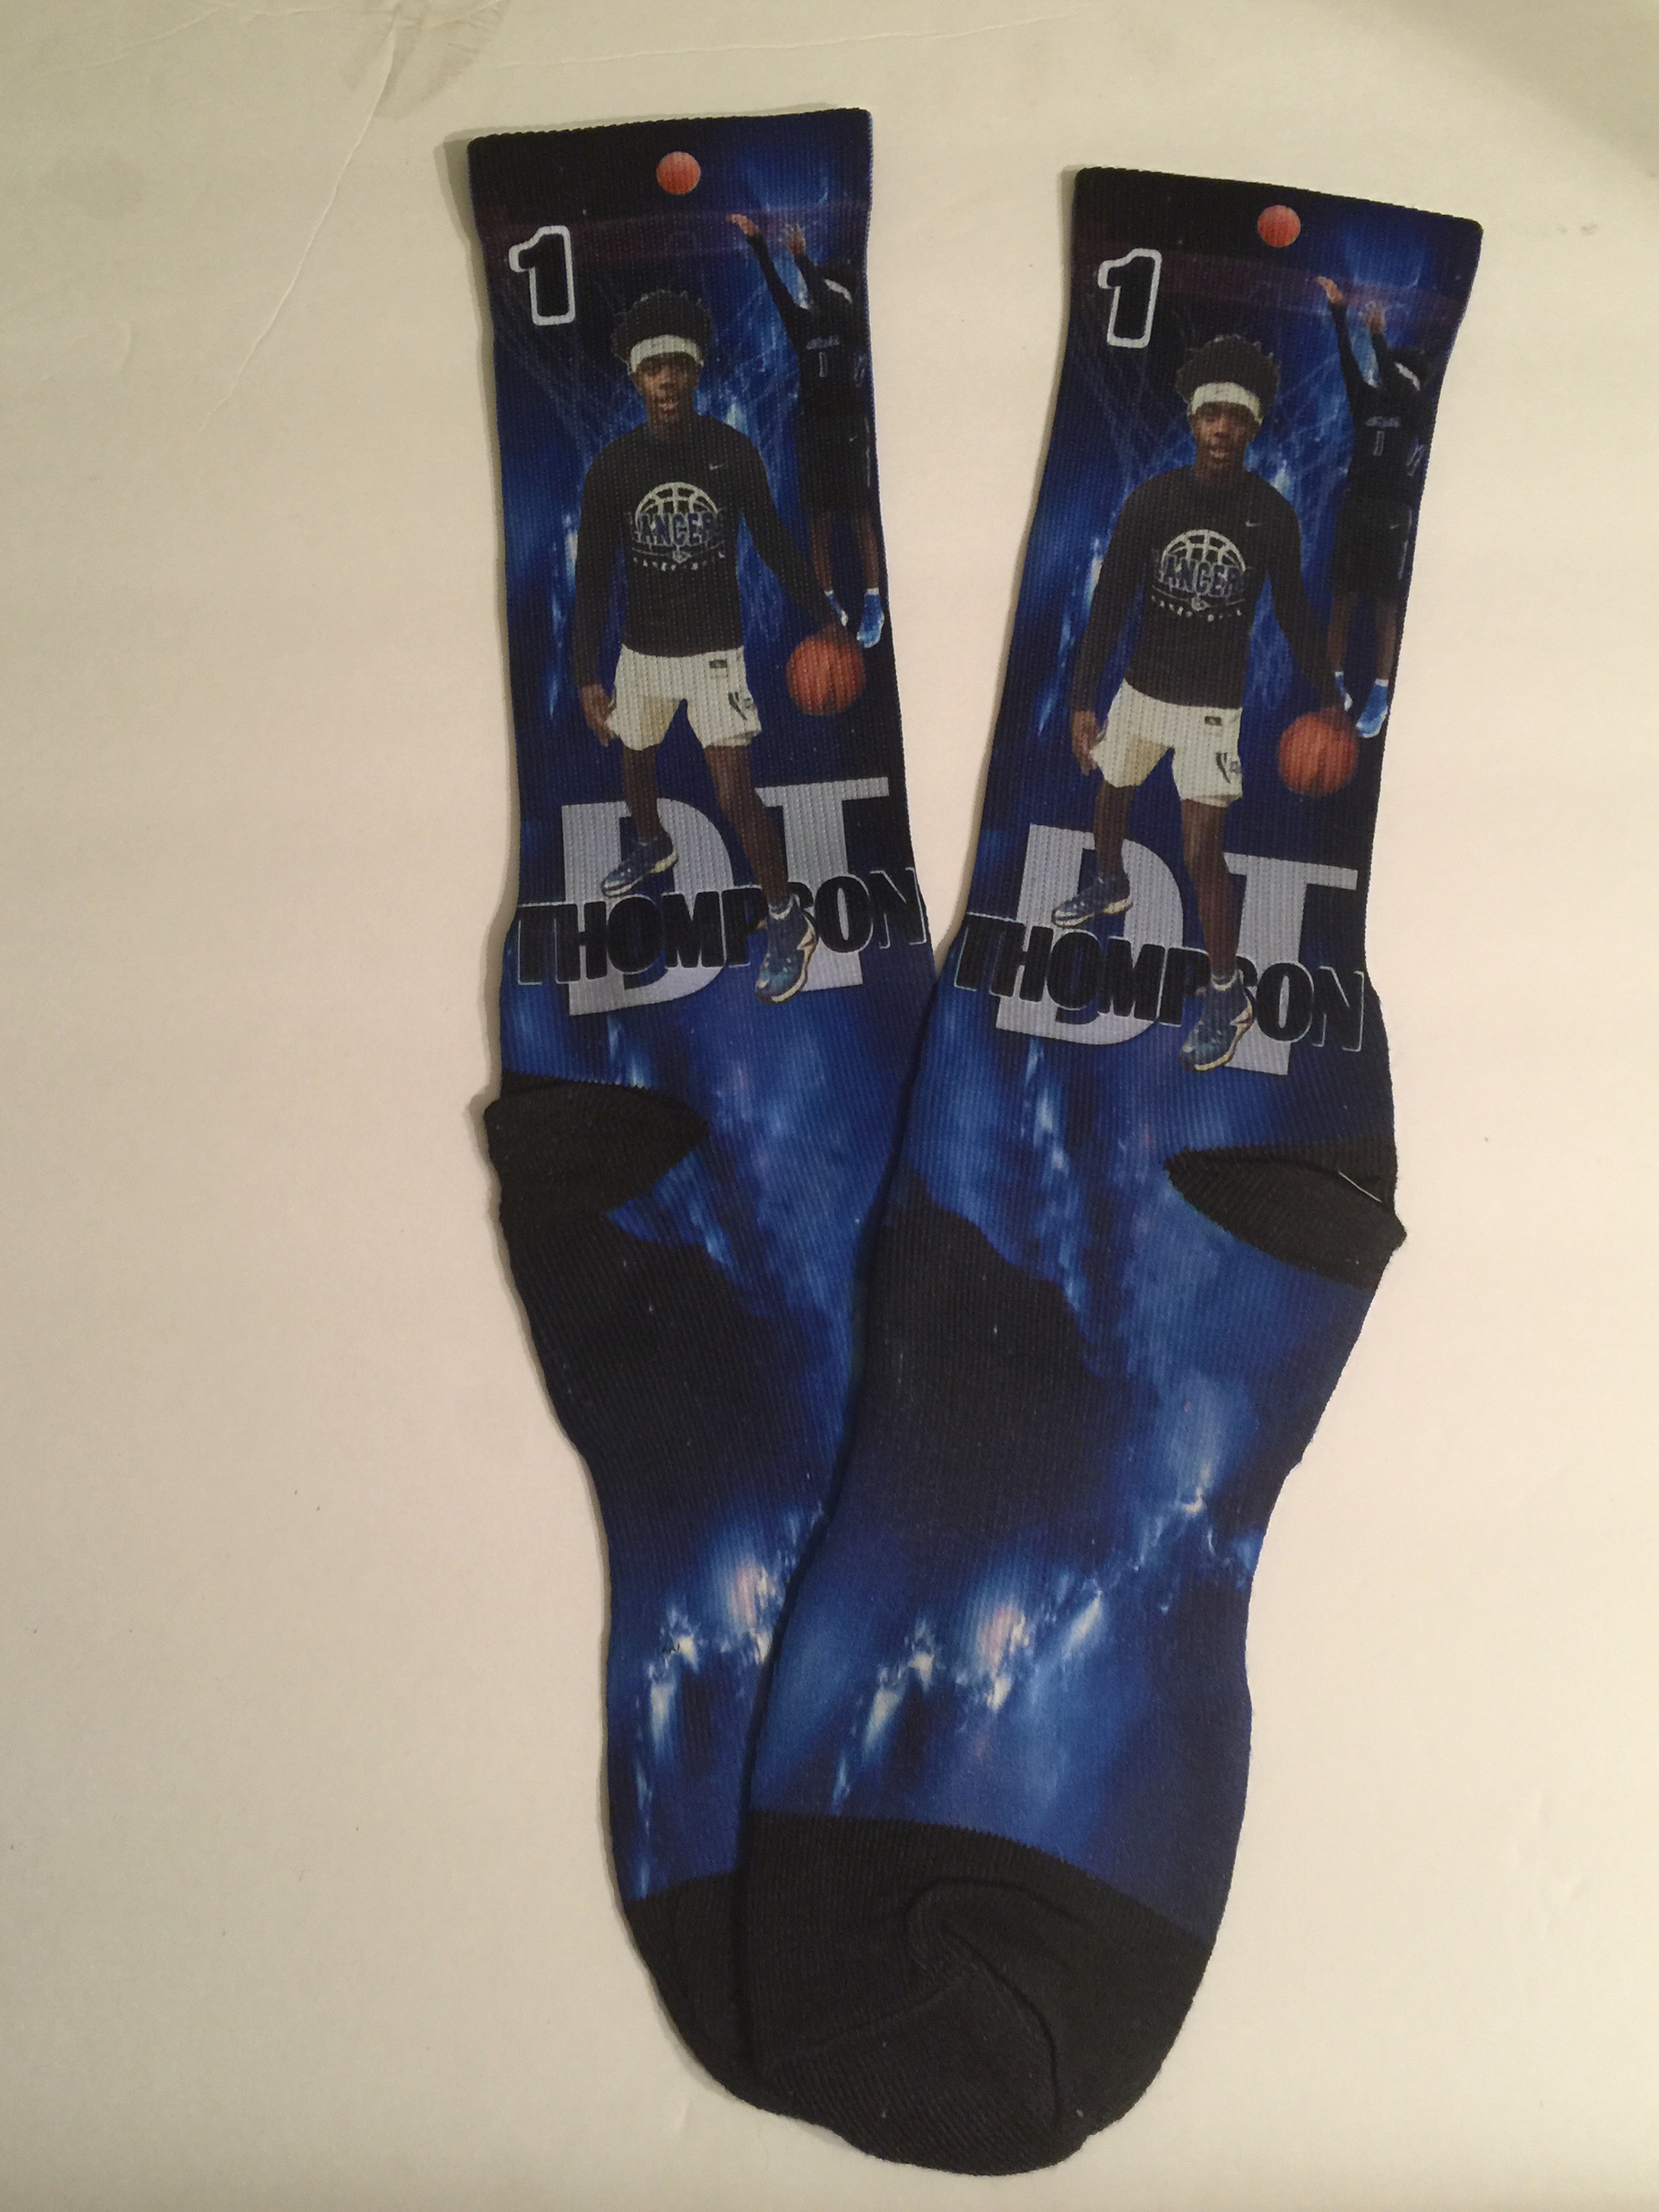 No. 1 Basketball Socks made with sublimation printing